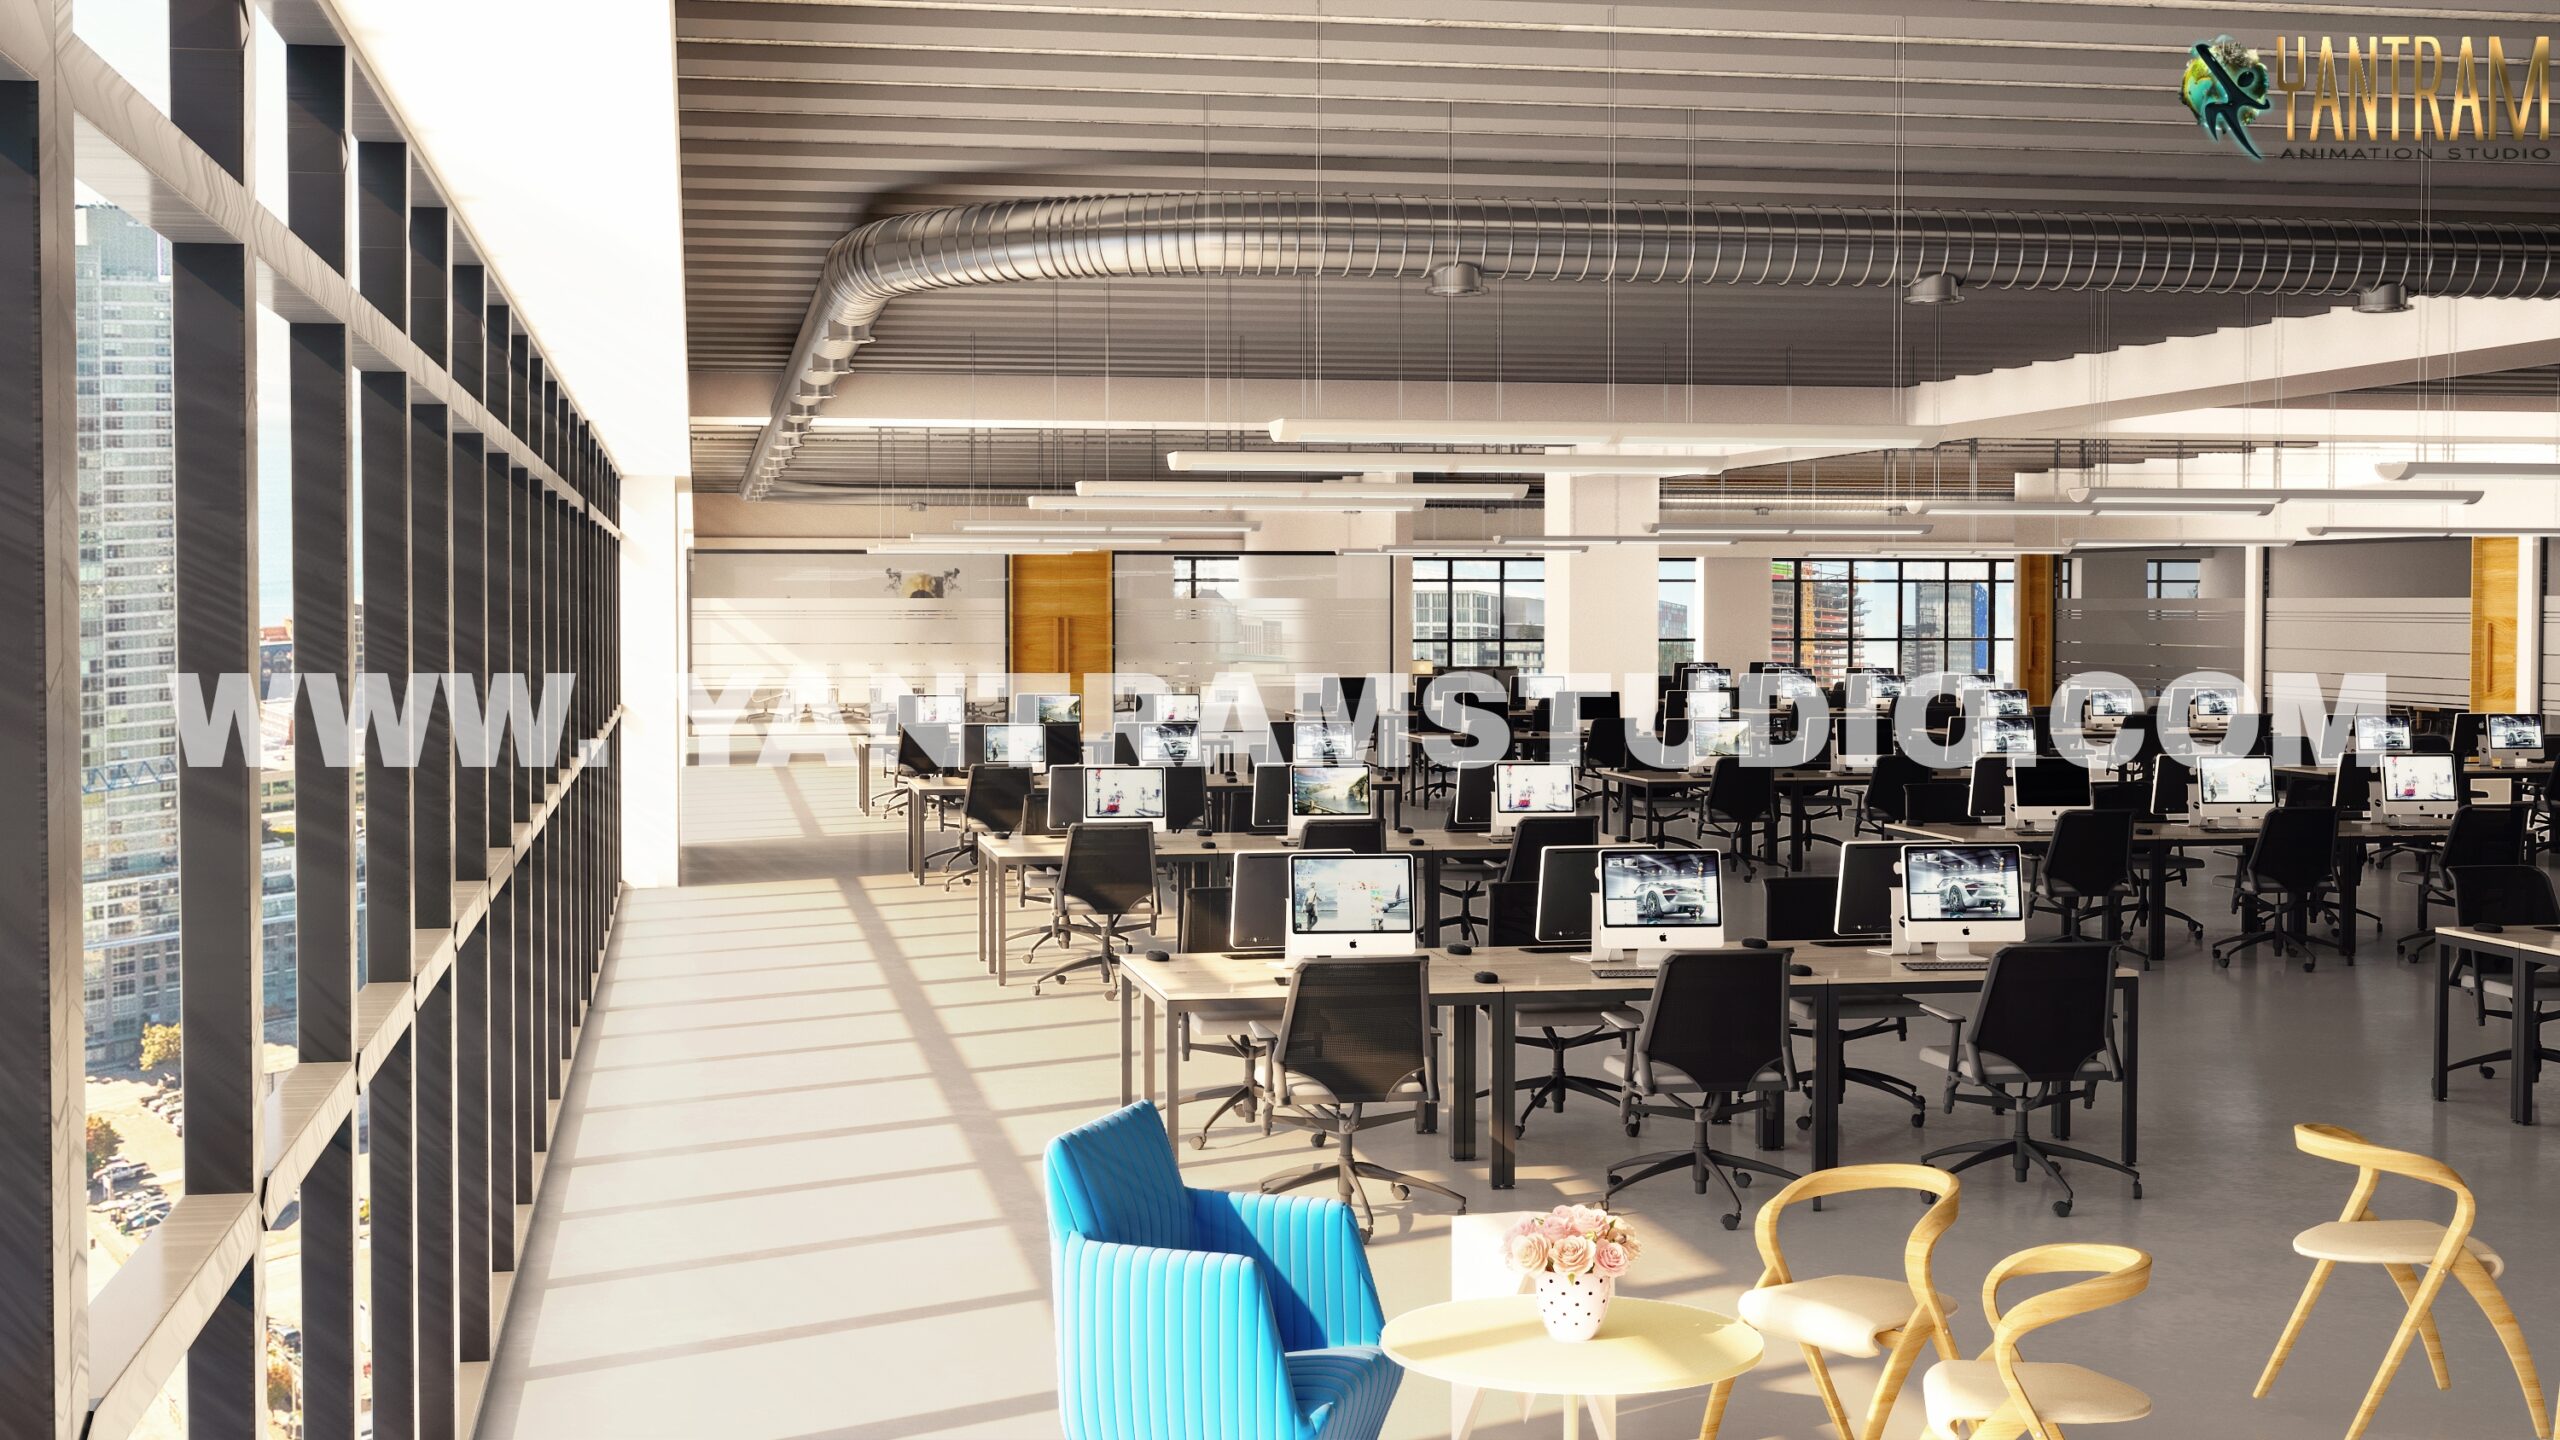 Amazing interior Design of Office by Yantram Architectural Visualisation Studio Dallas, Texas